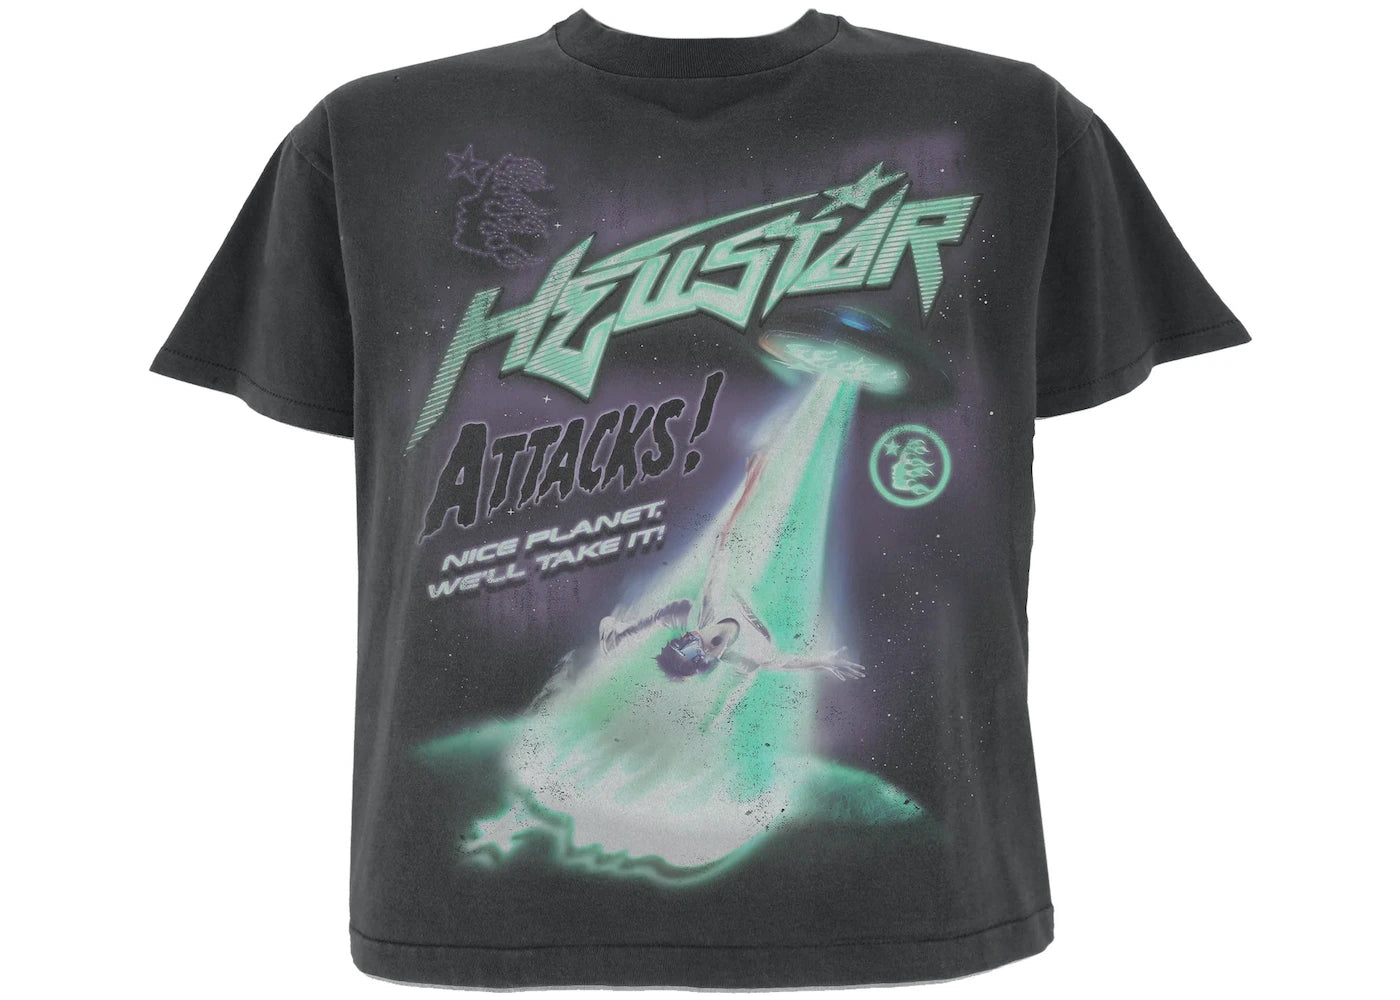 Hellstar Capsule 10 Attacks T-Shirt